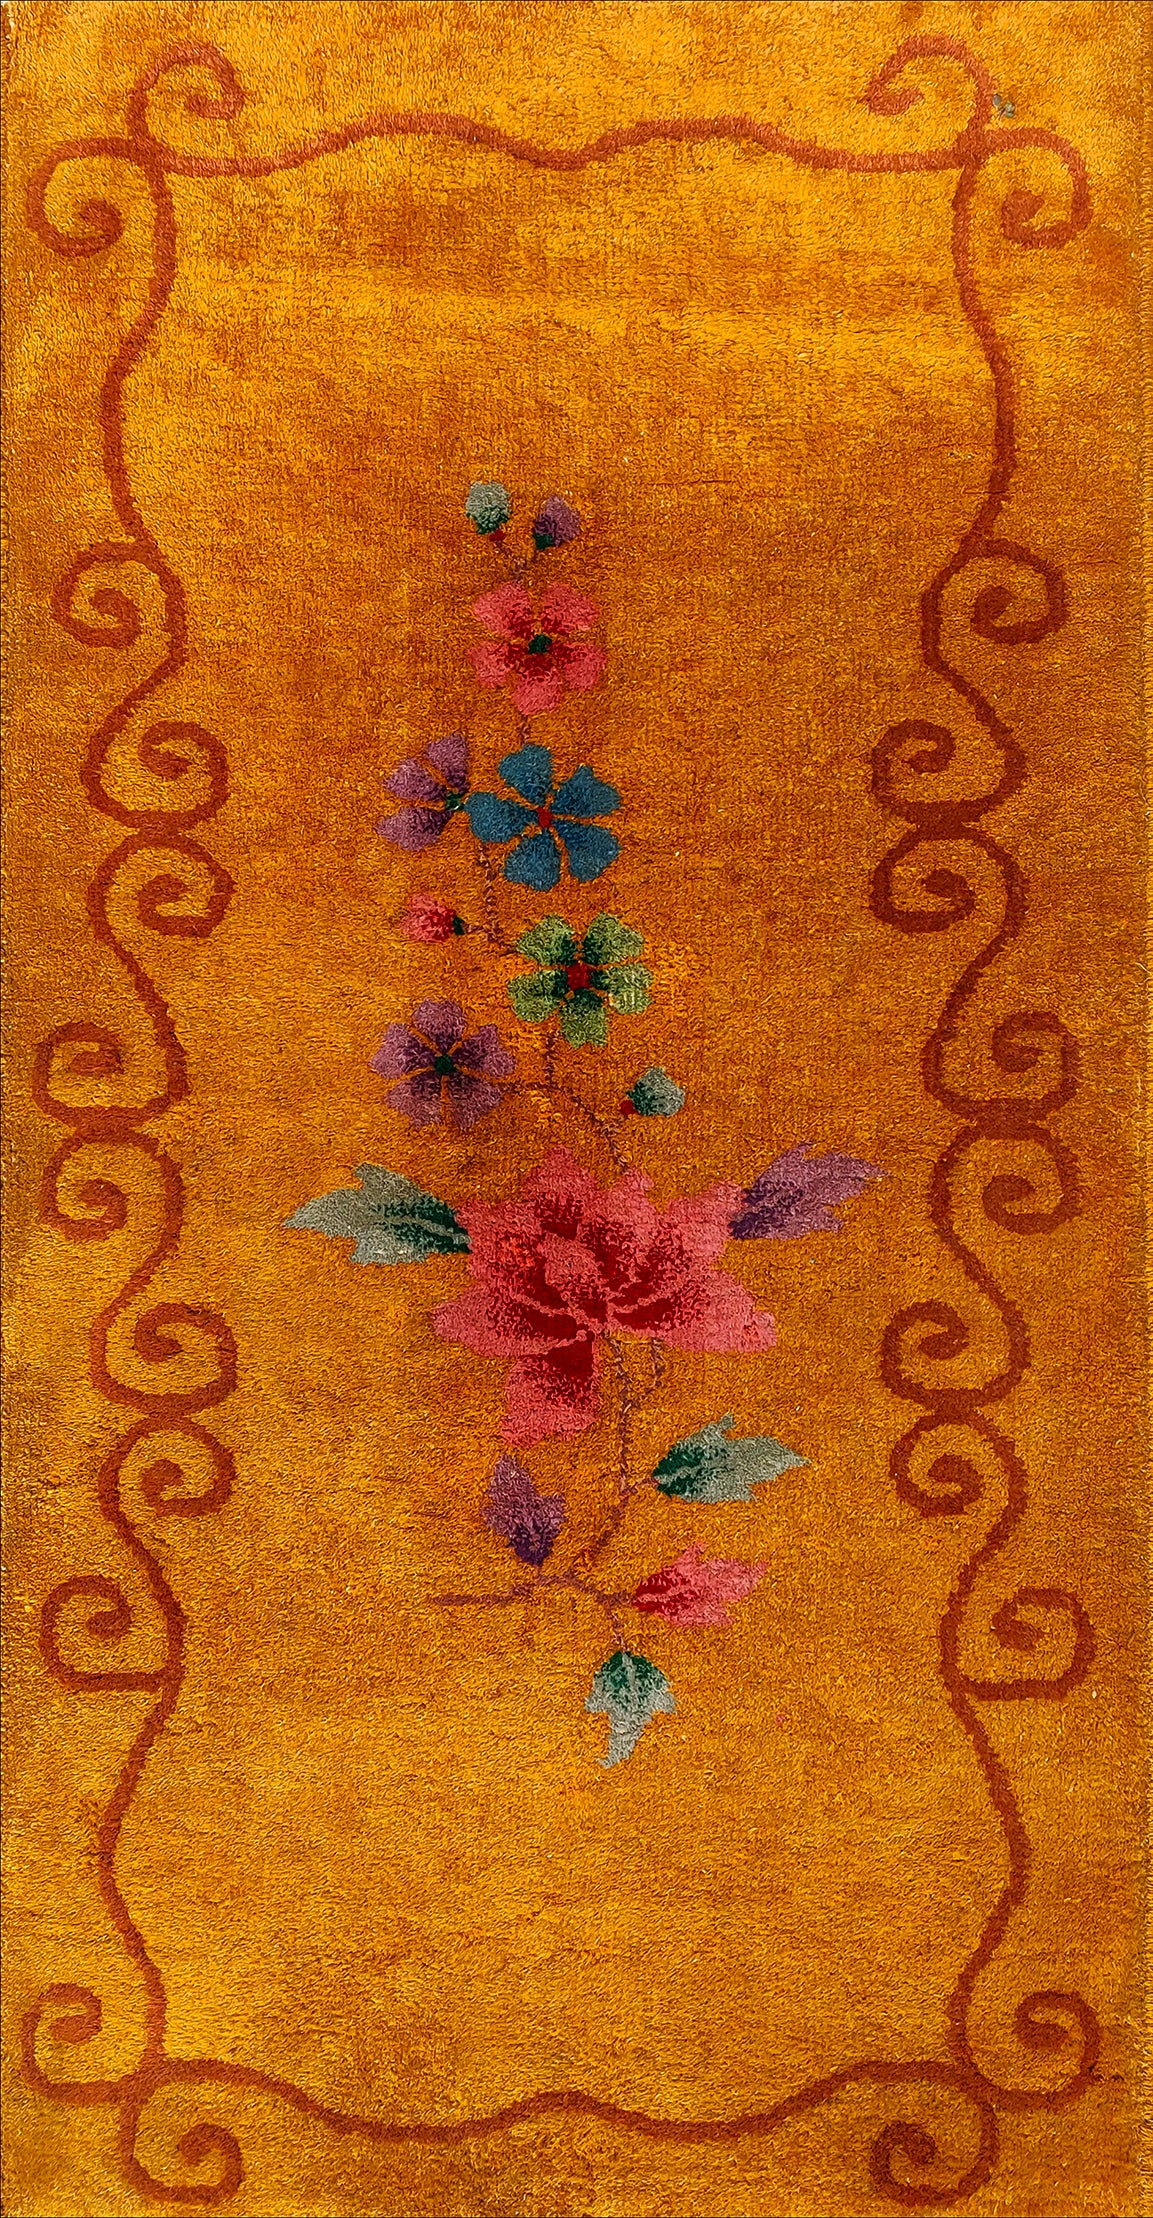 1920s Chinese Art Deco Carpet (2' x 3' 9" - 60 x 115 cm)